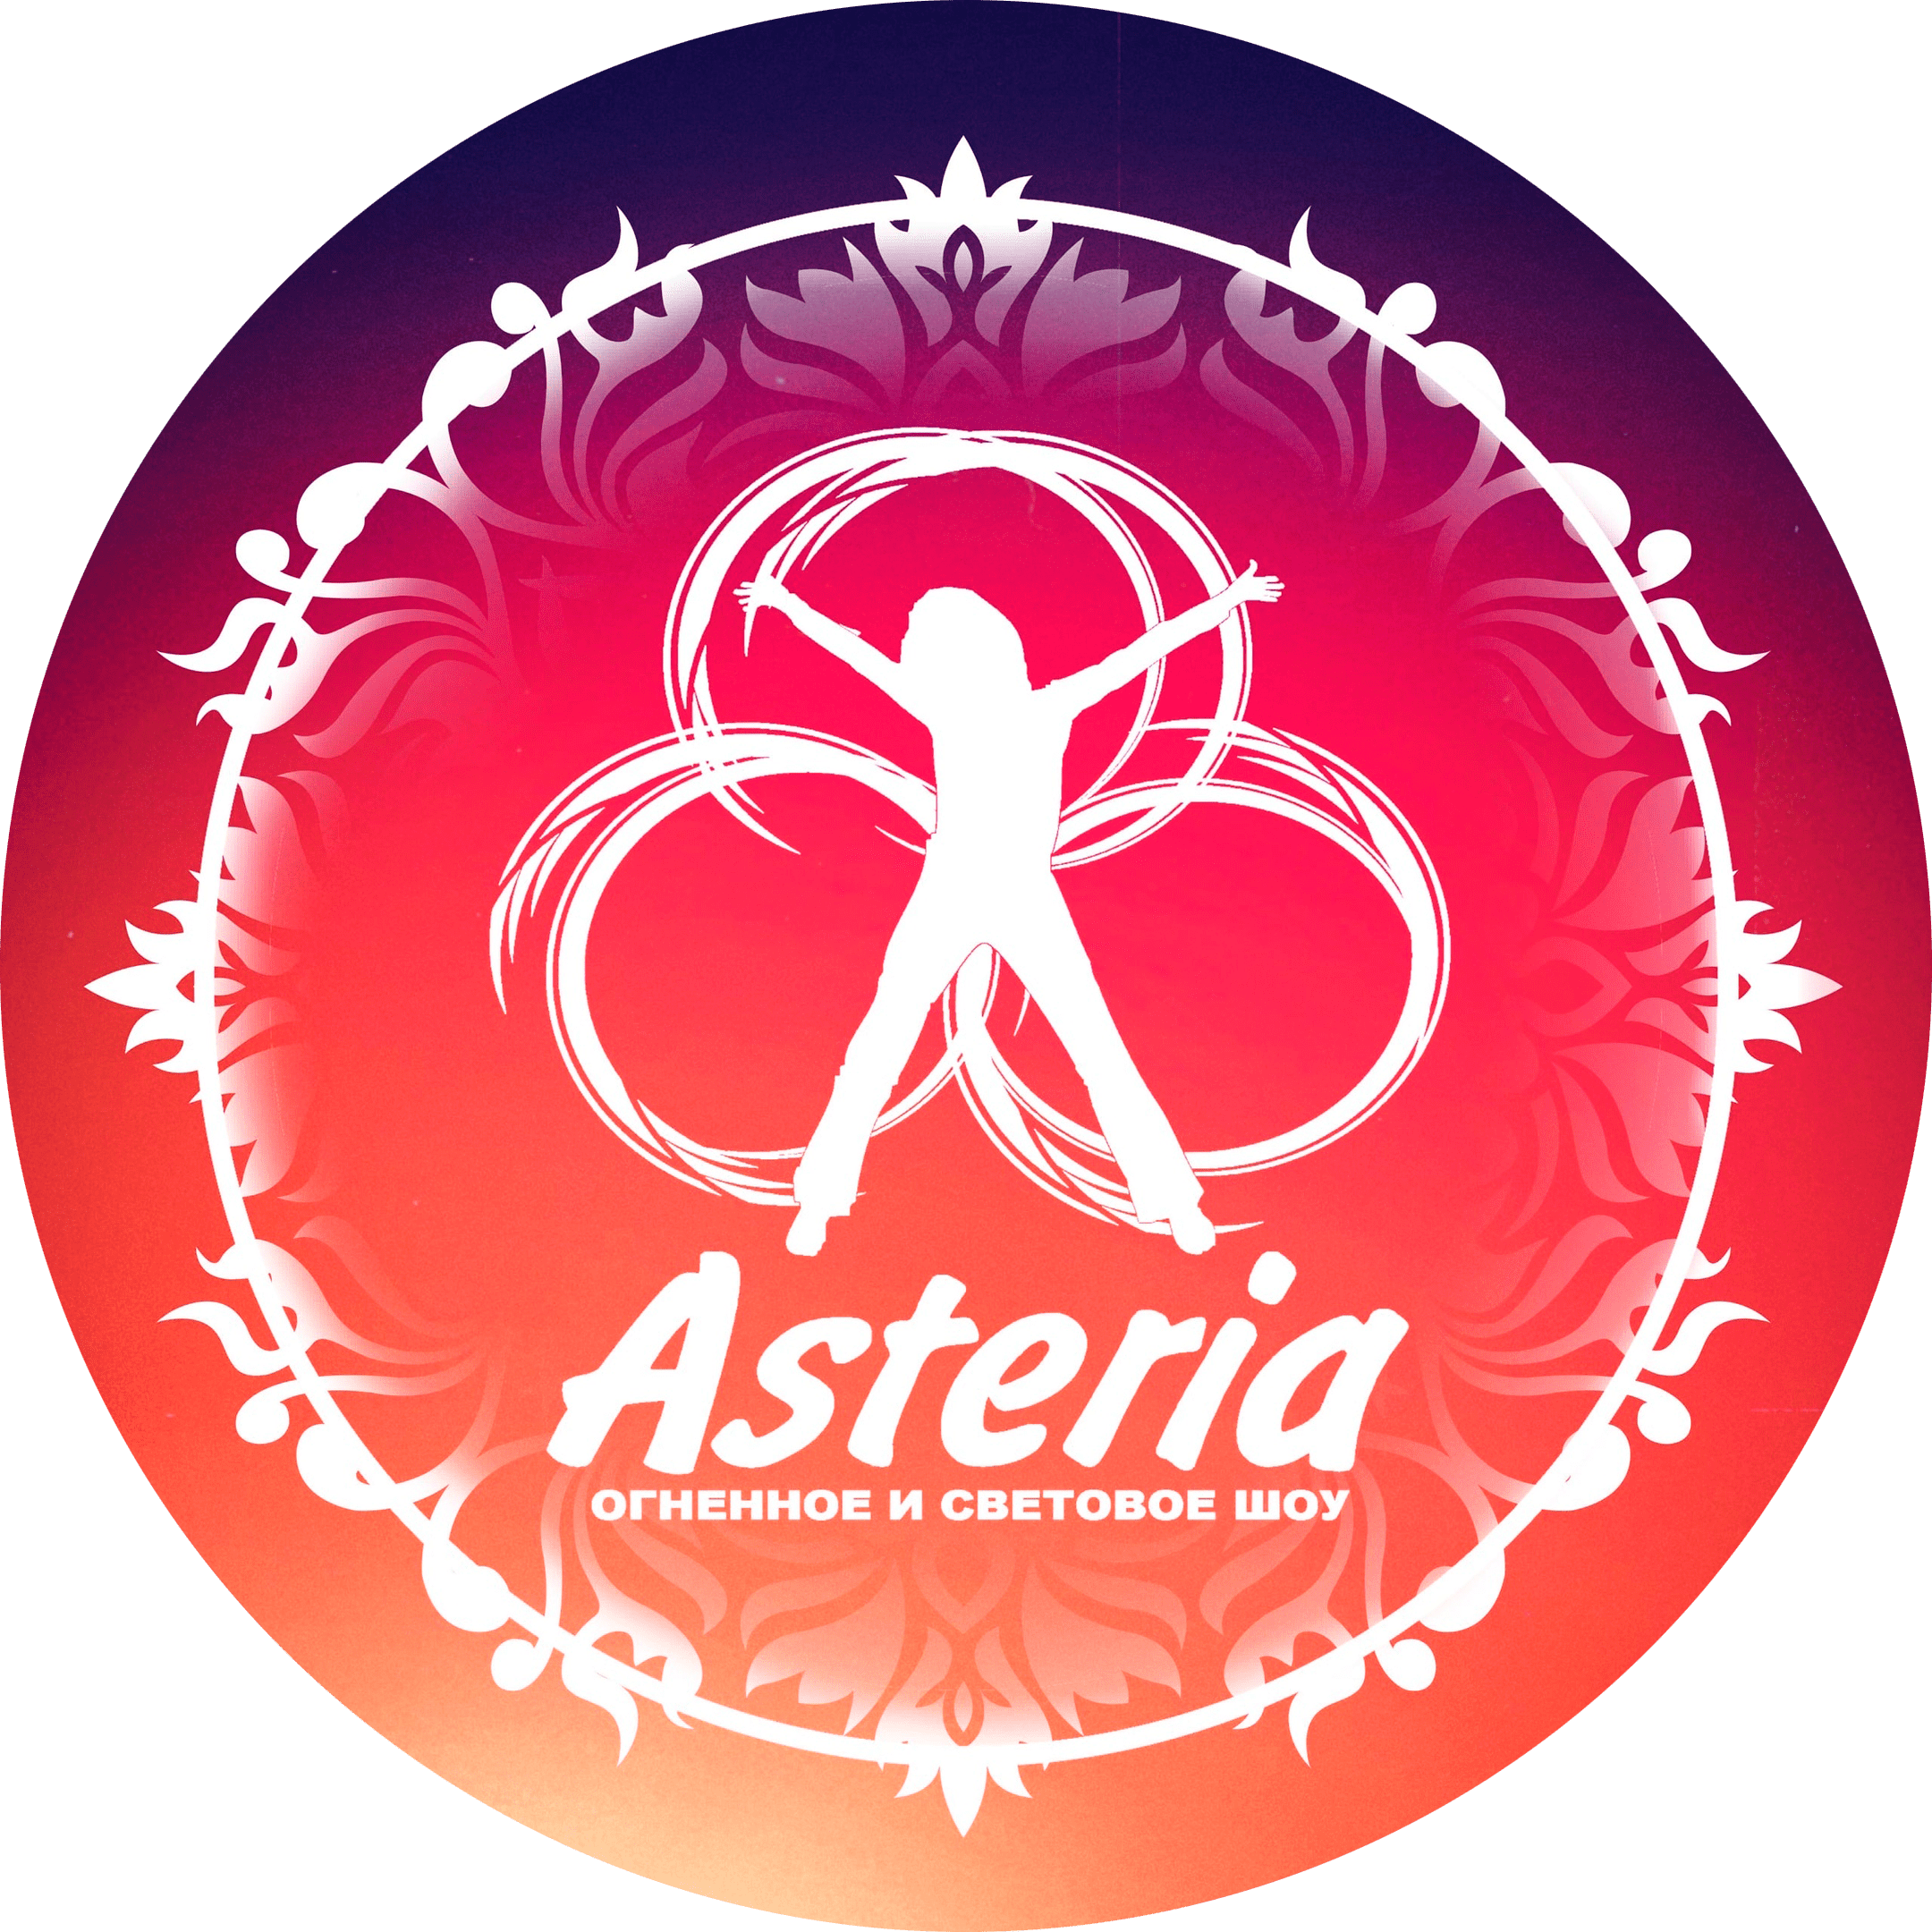 AsteriaShow